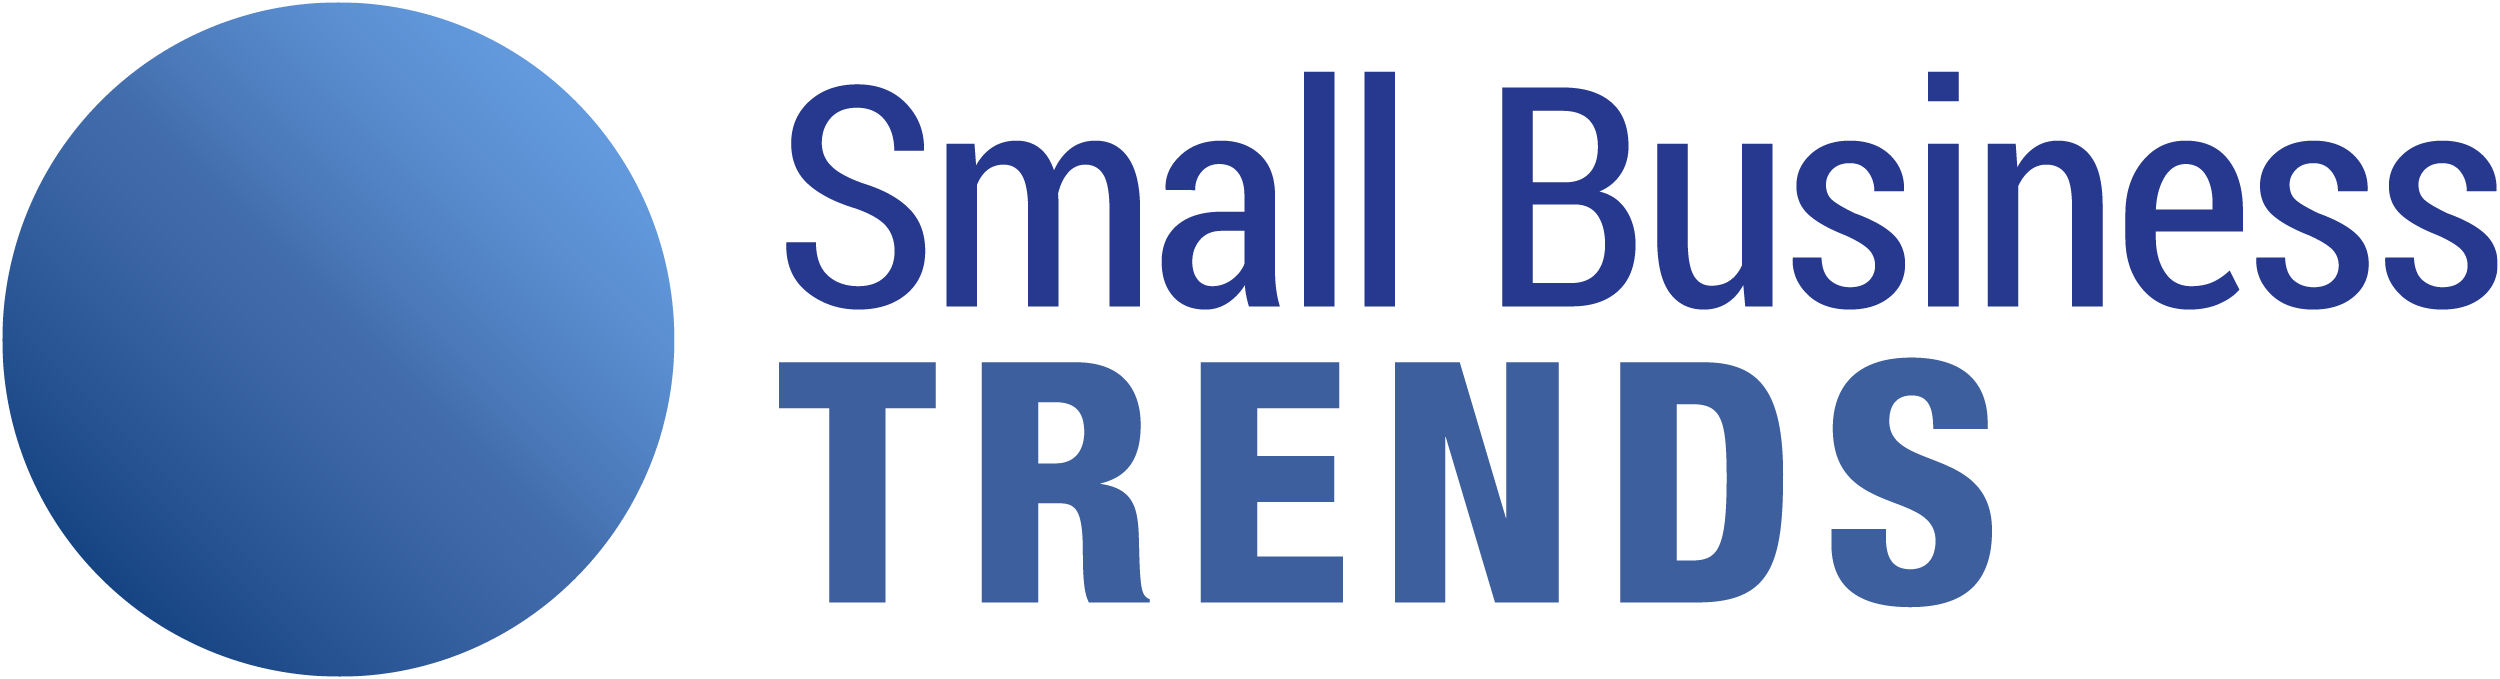 Small Company Logo - Small Business Trends Logo - Small Business Trends